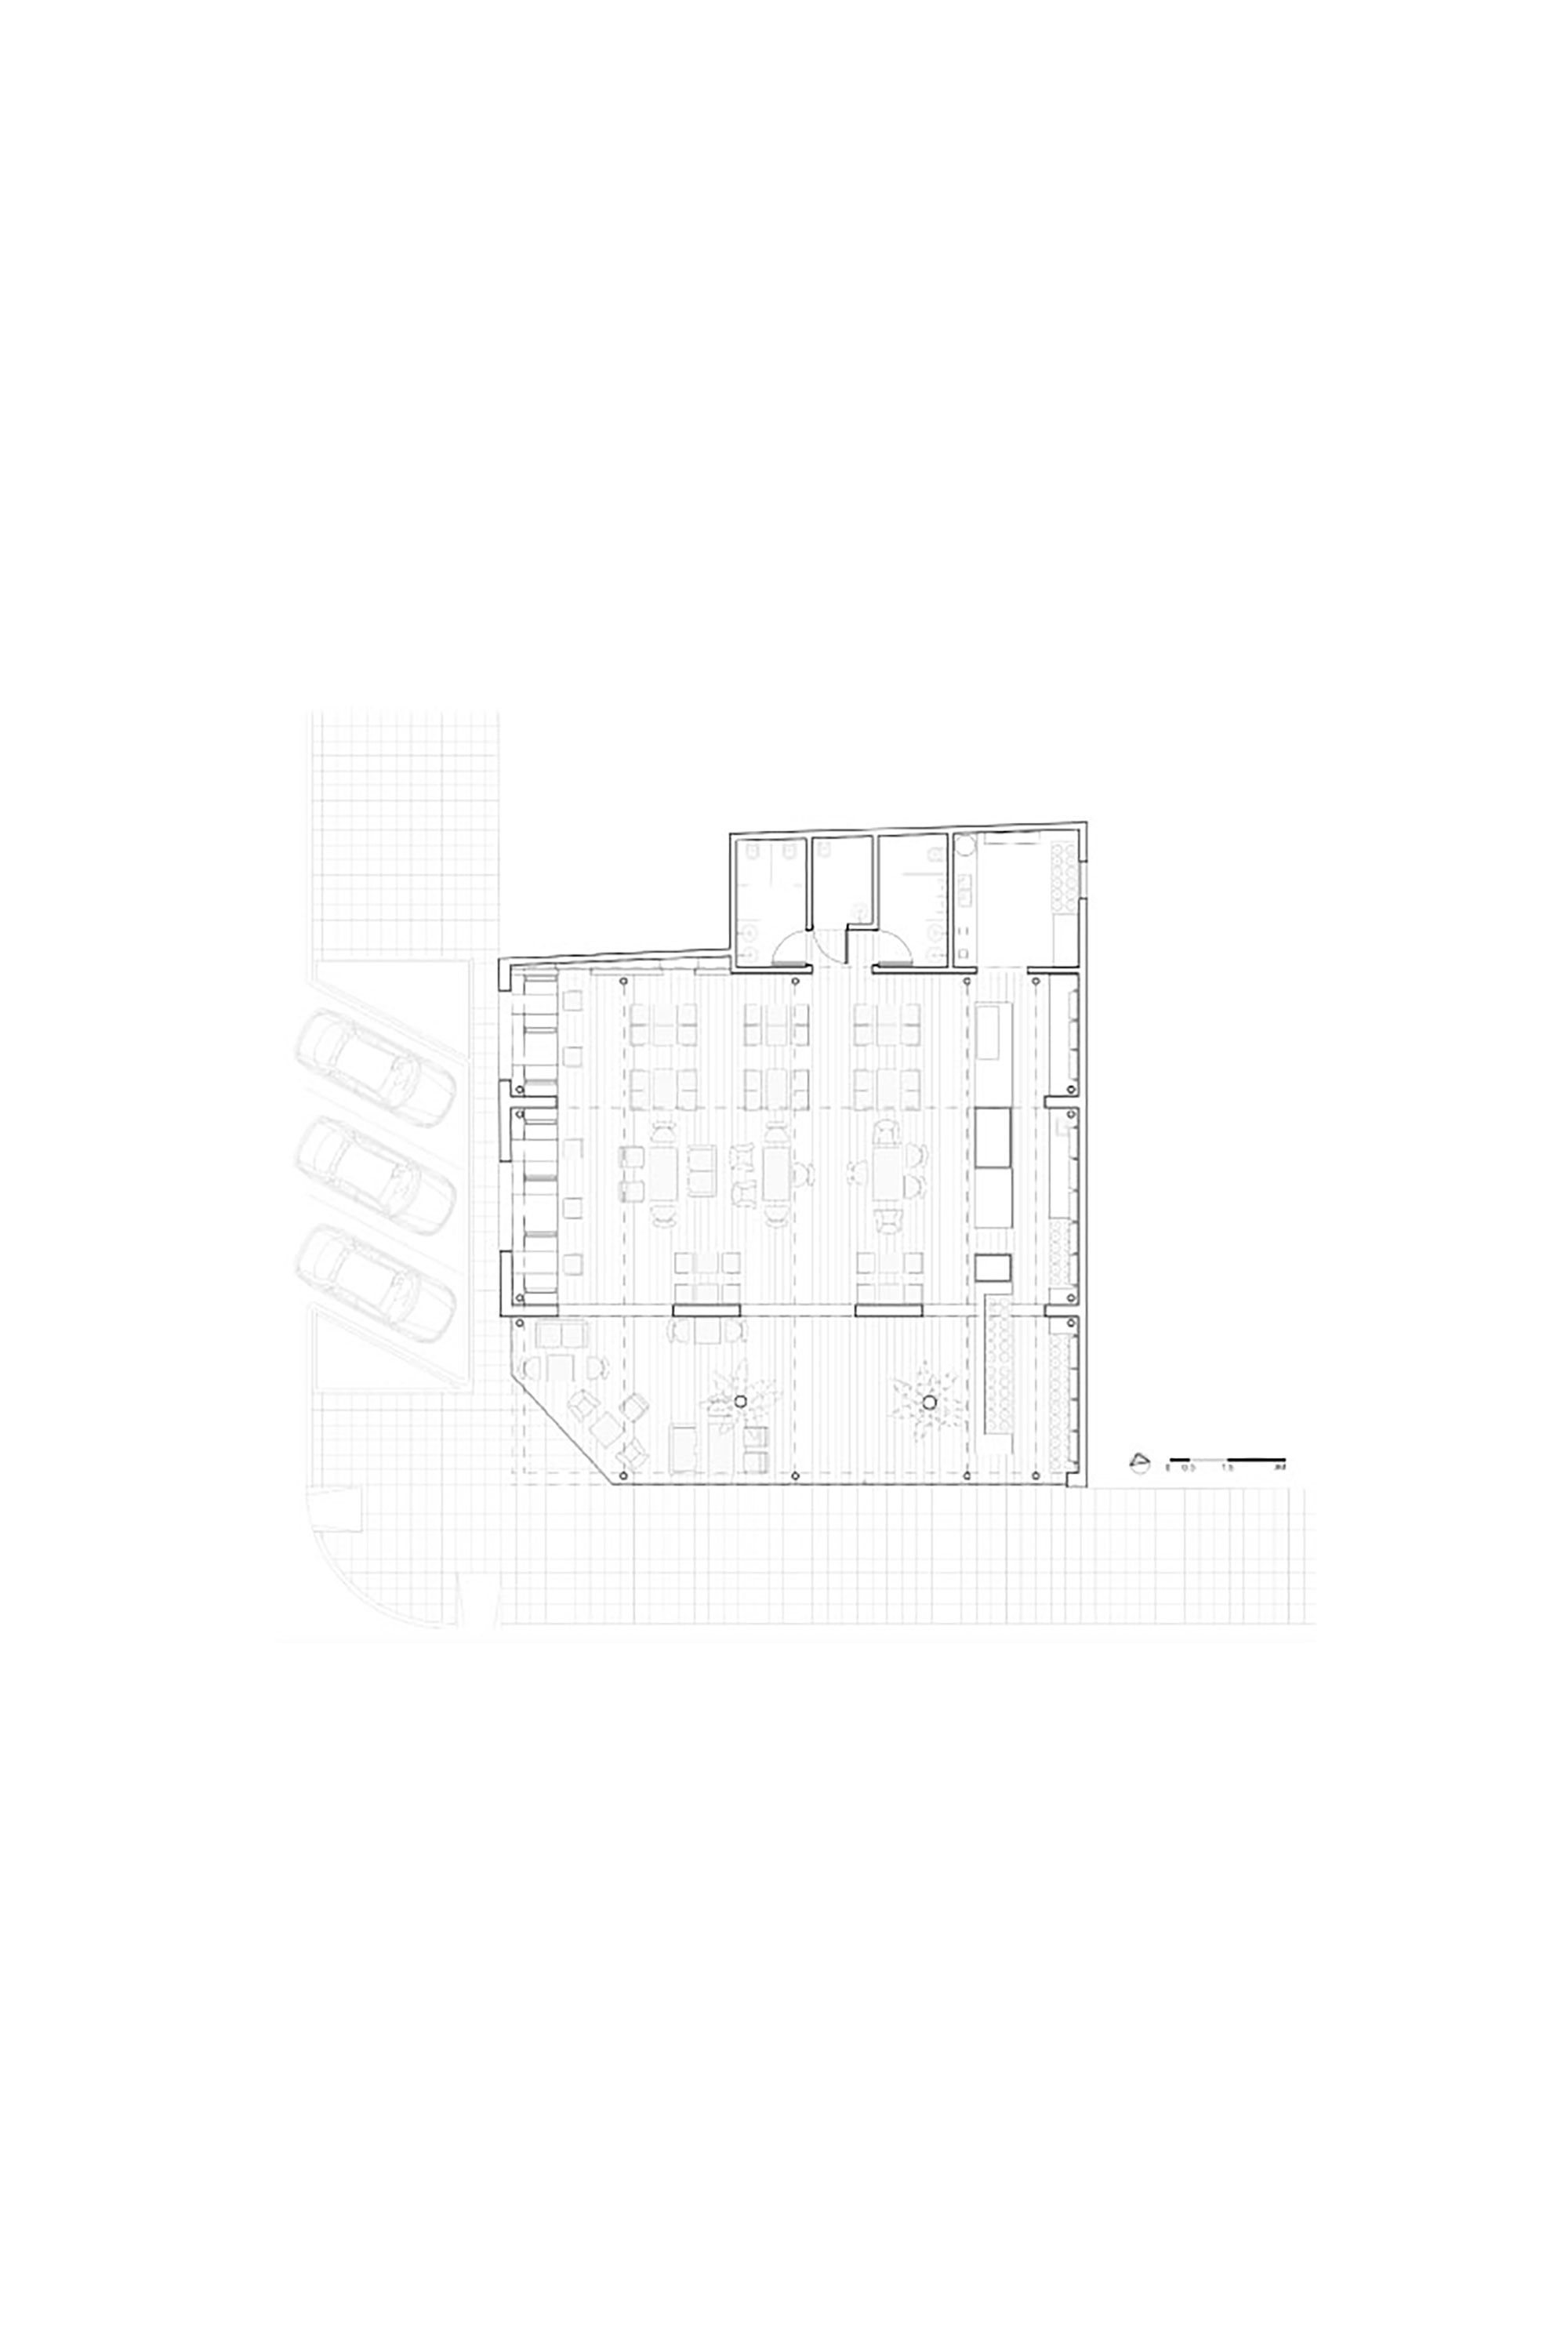 Veneciana Alsina ||| Lomas de Zamora ||| DRM Ariquitectura